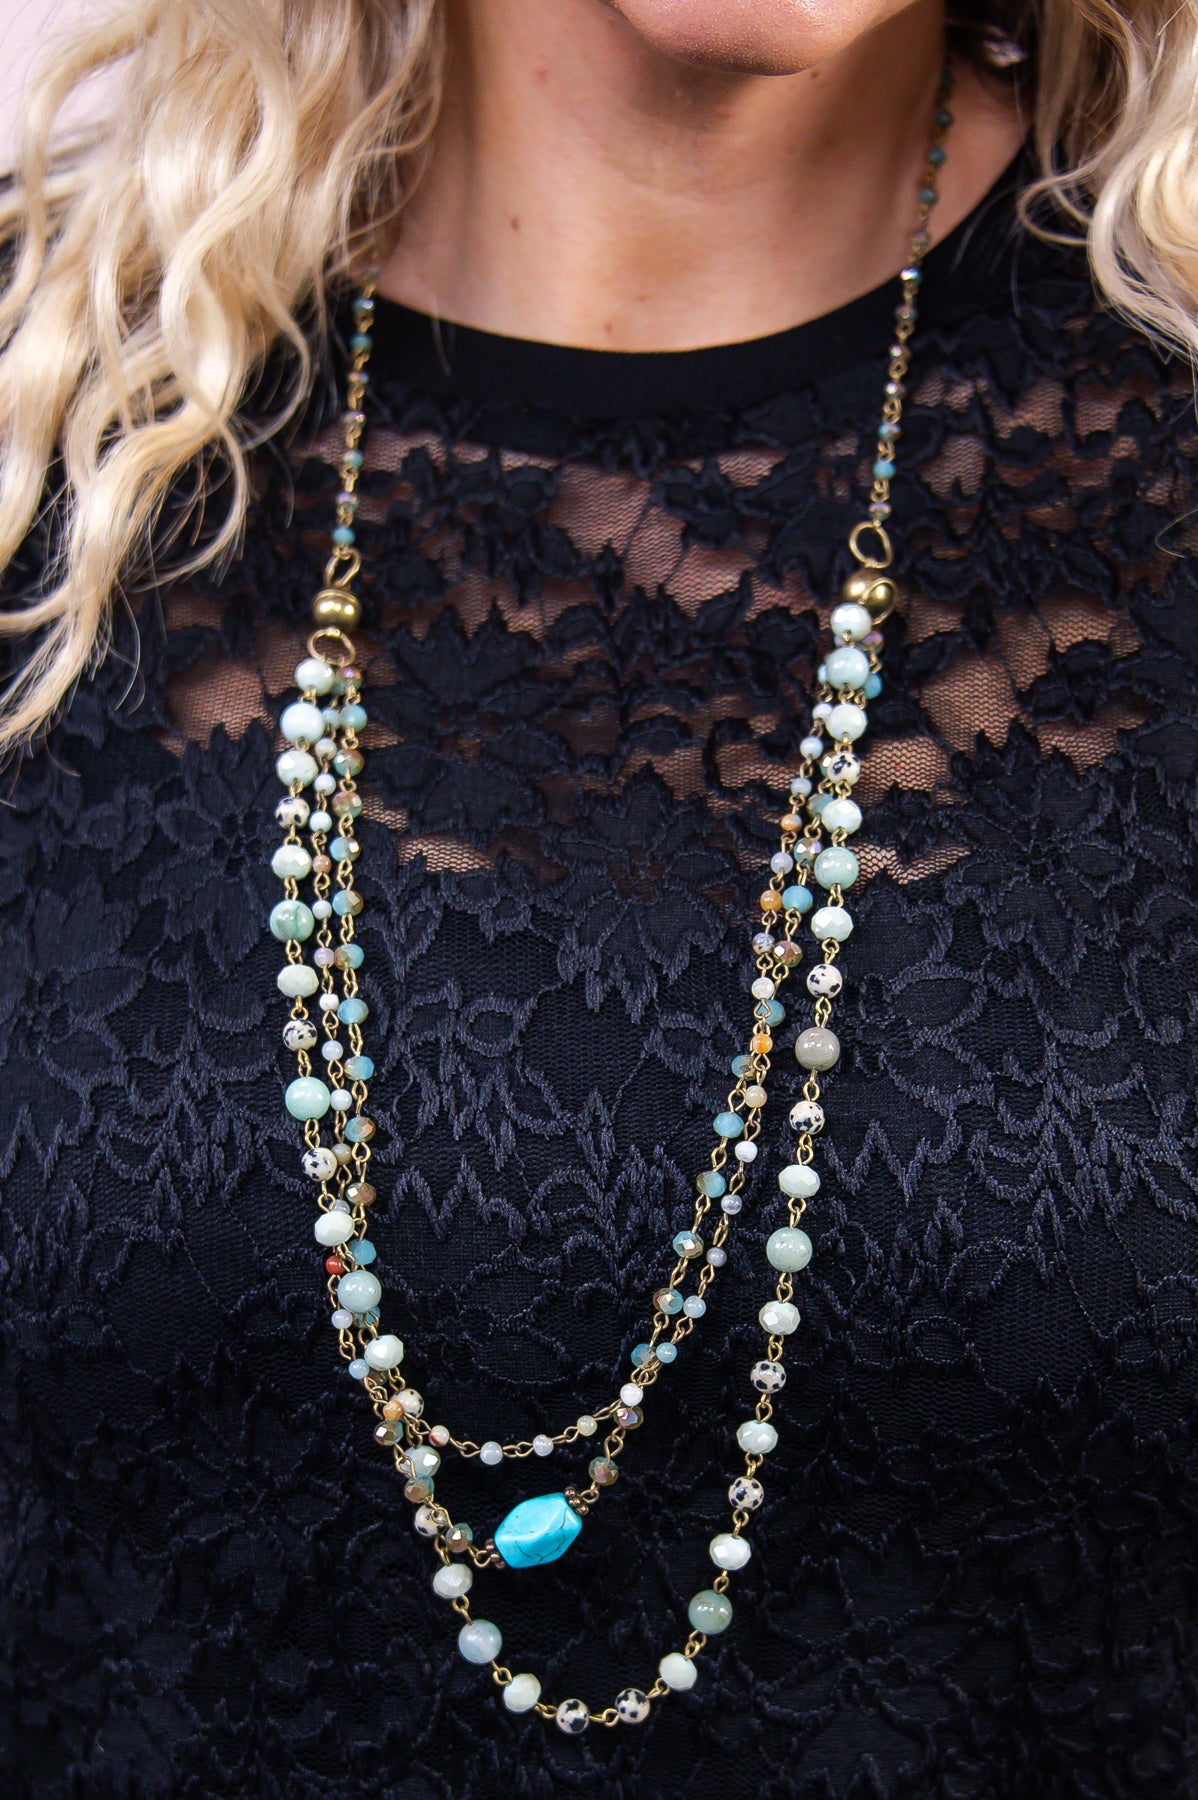 Turquoise/Multi Color Layered Bead Necklace - NEK4277TU